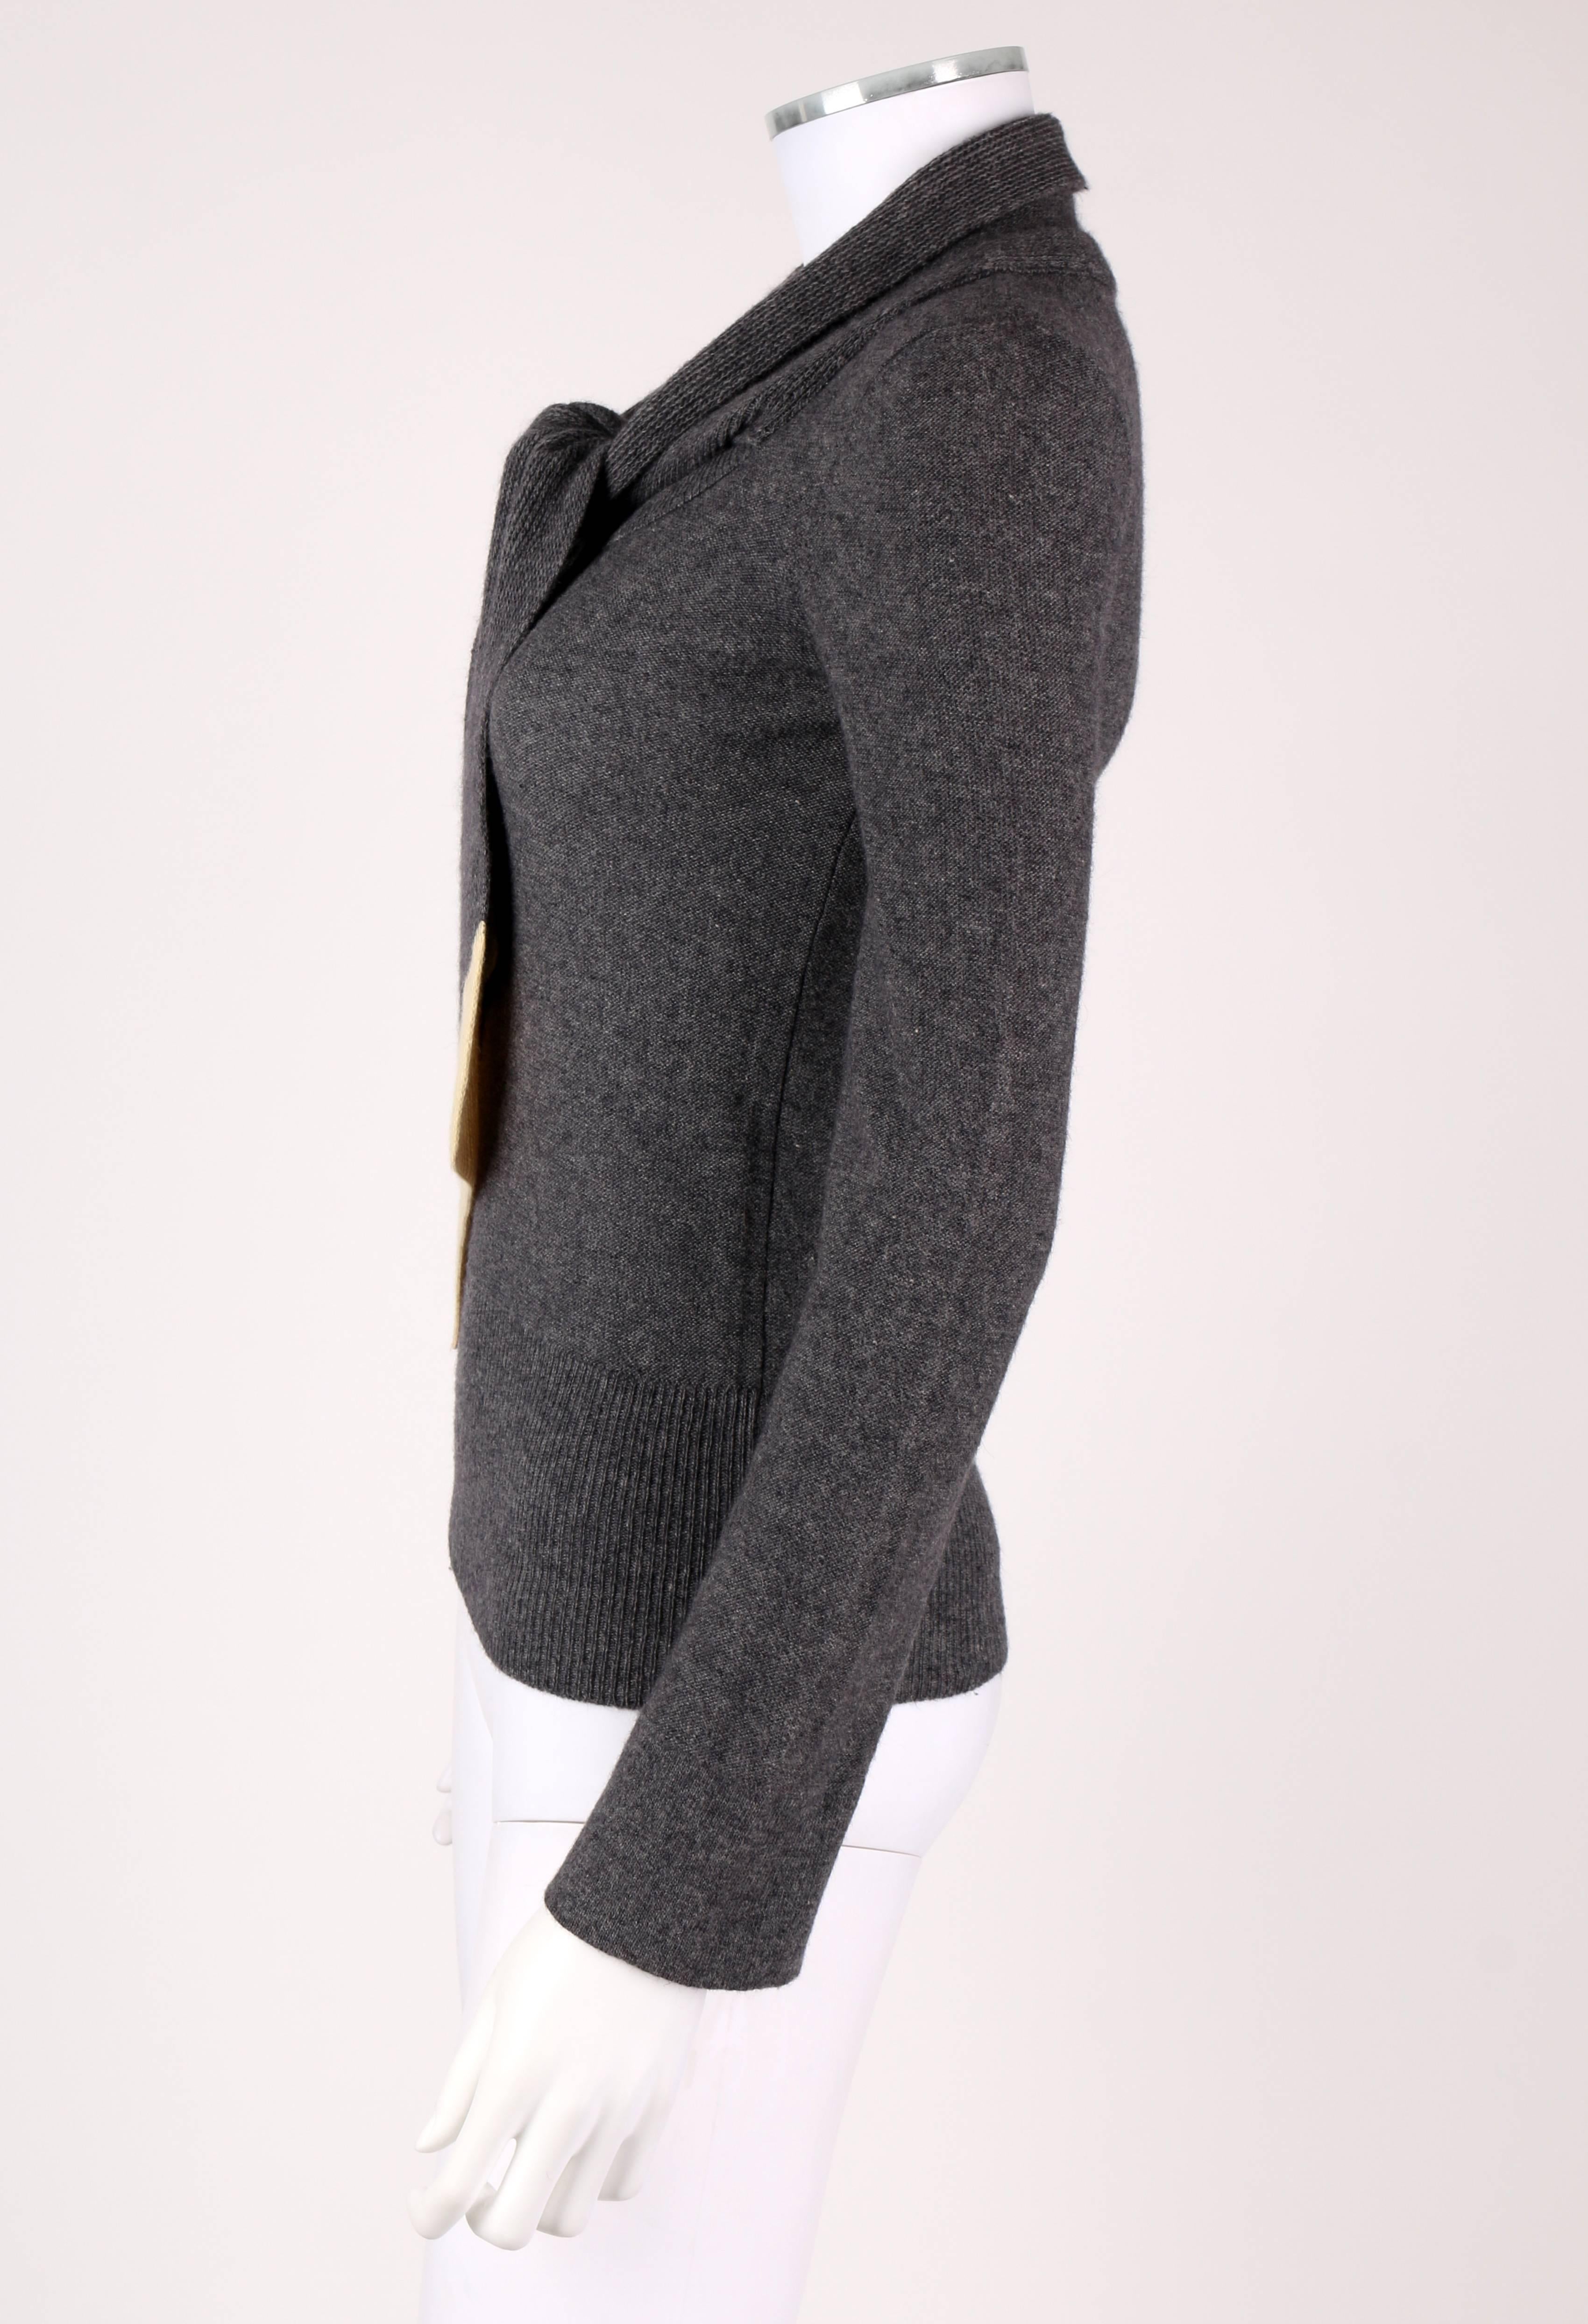 SONIA RYKIEL Chez Henri Bendel c.1960's Gray Wool Knit Scarf Pullover Sweater 1